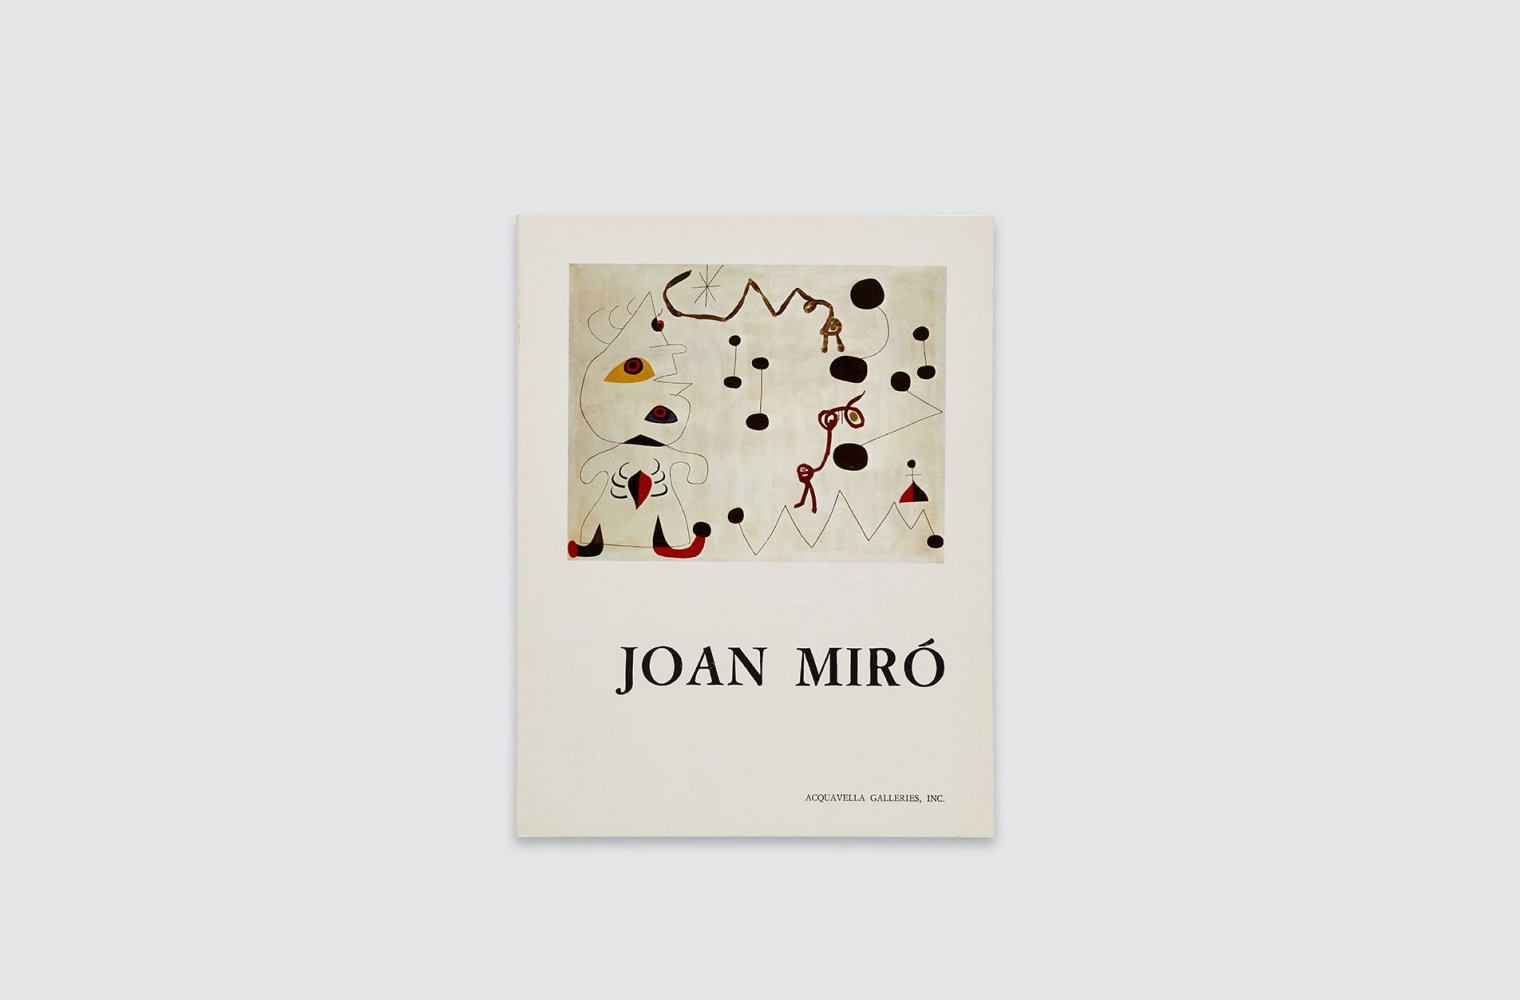 Catalogue for Joan Mir&oacute; exhibition, fall 1972.